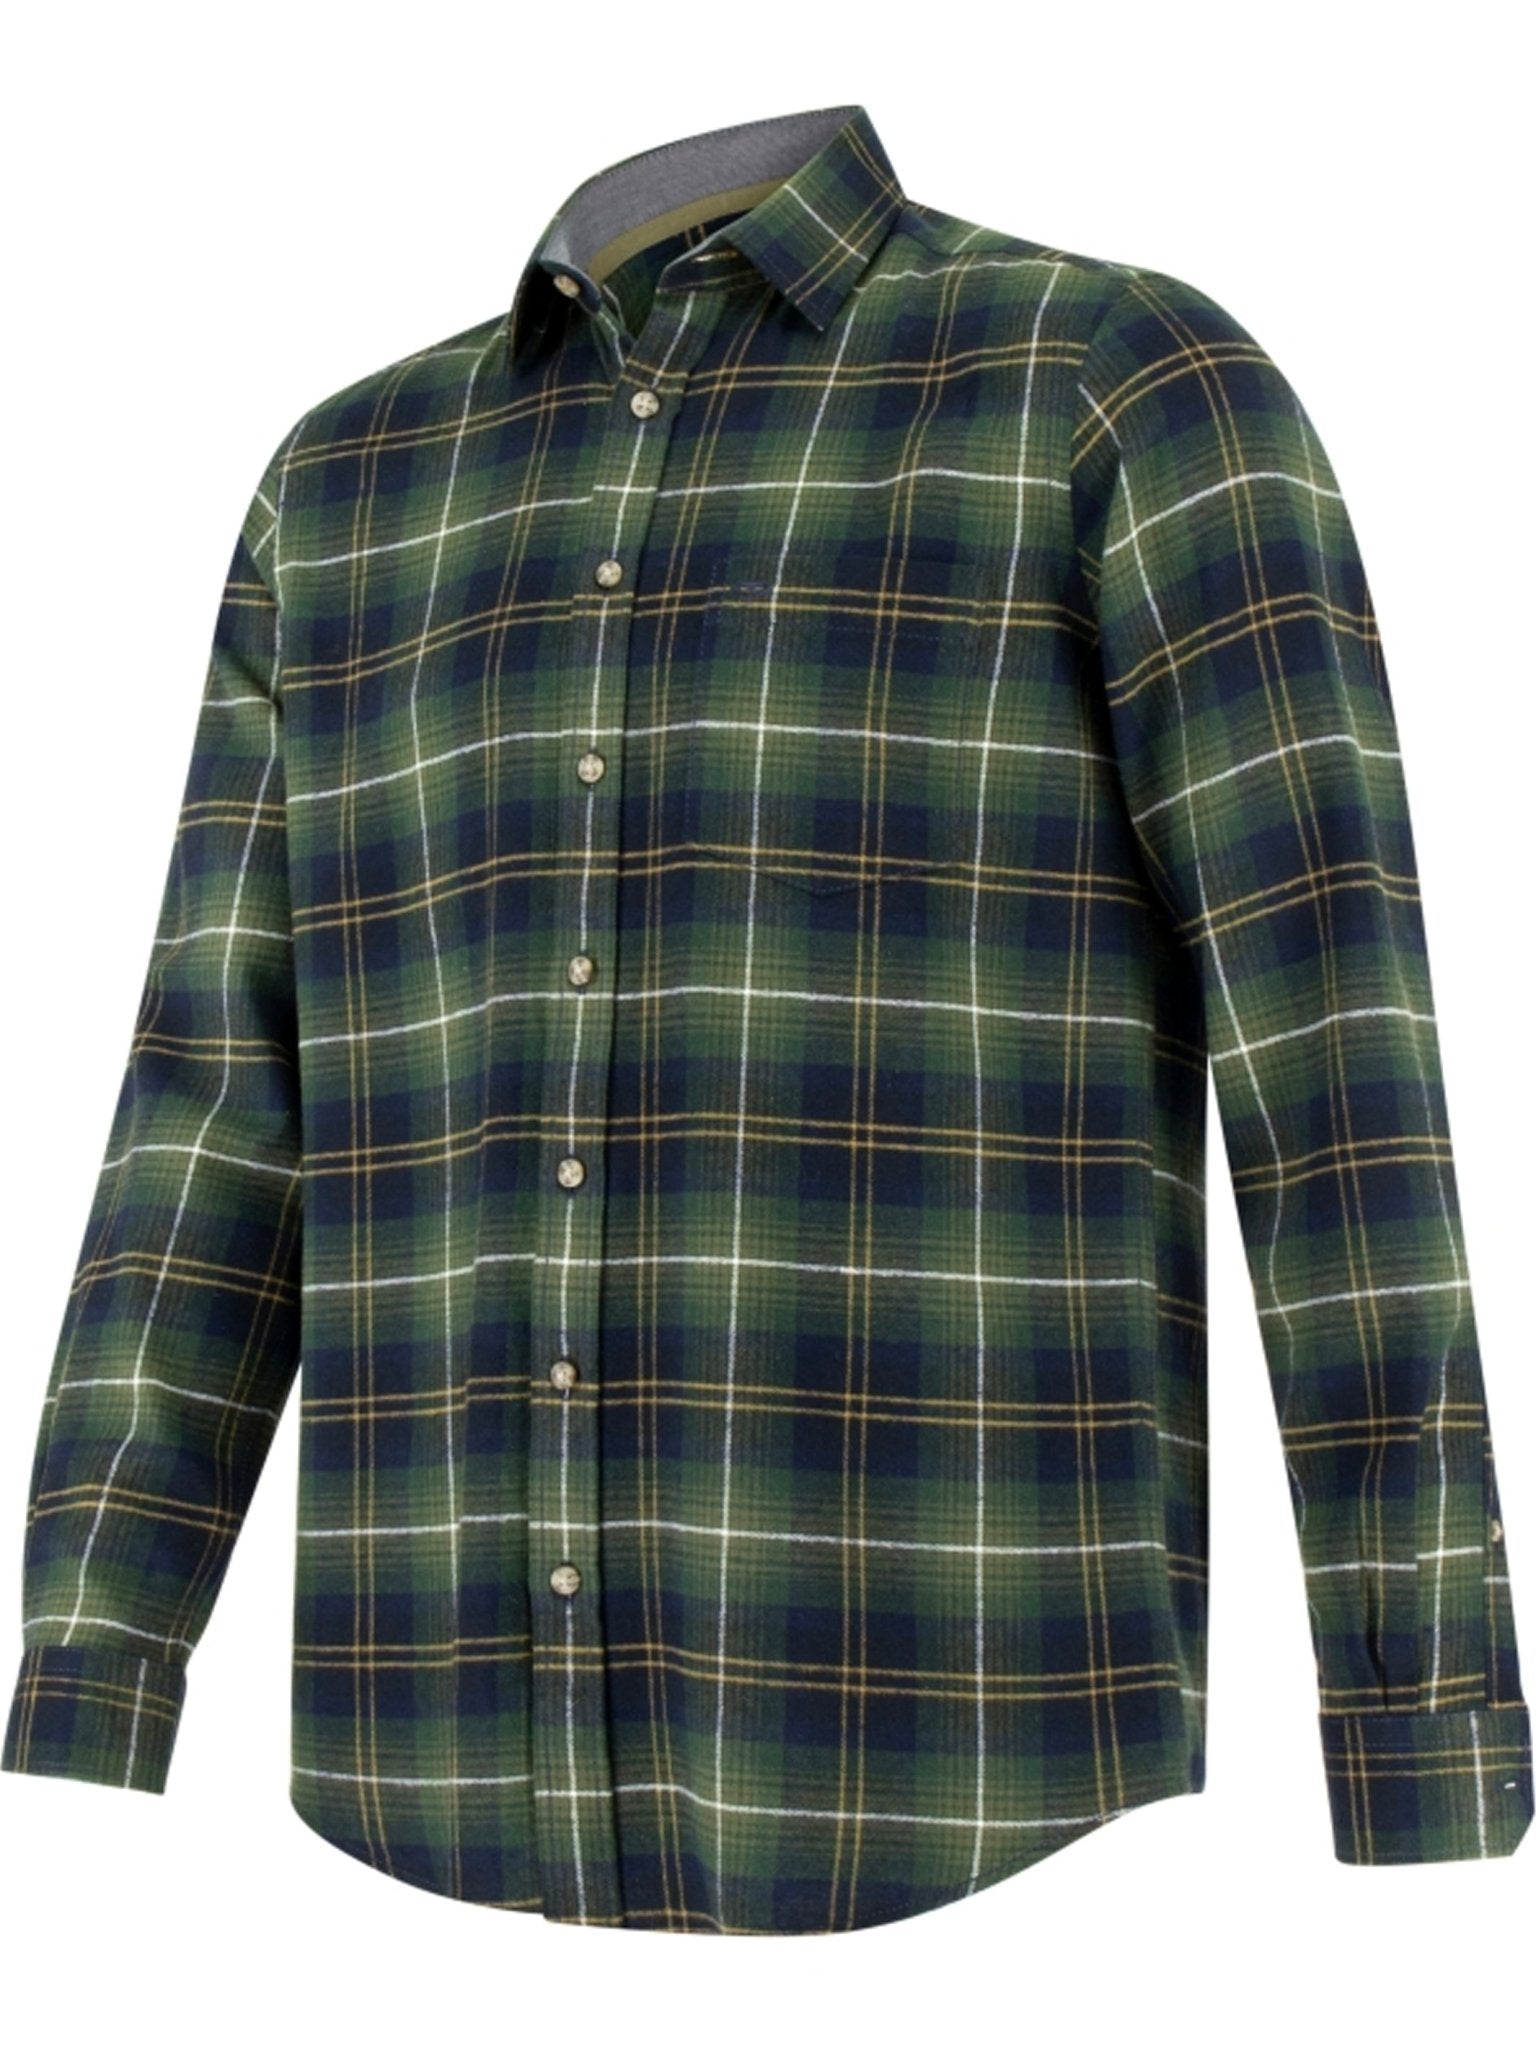 4elementsclothingHoggs of FifeHoggs of Fife - Mens Shirt, Long Sleeve Flannel Check Shirt - Pitmedden Country shirtShirtPITM/GR/1